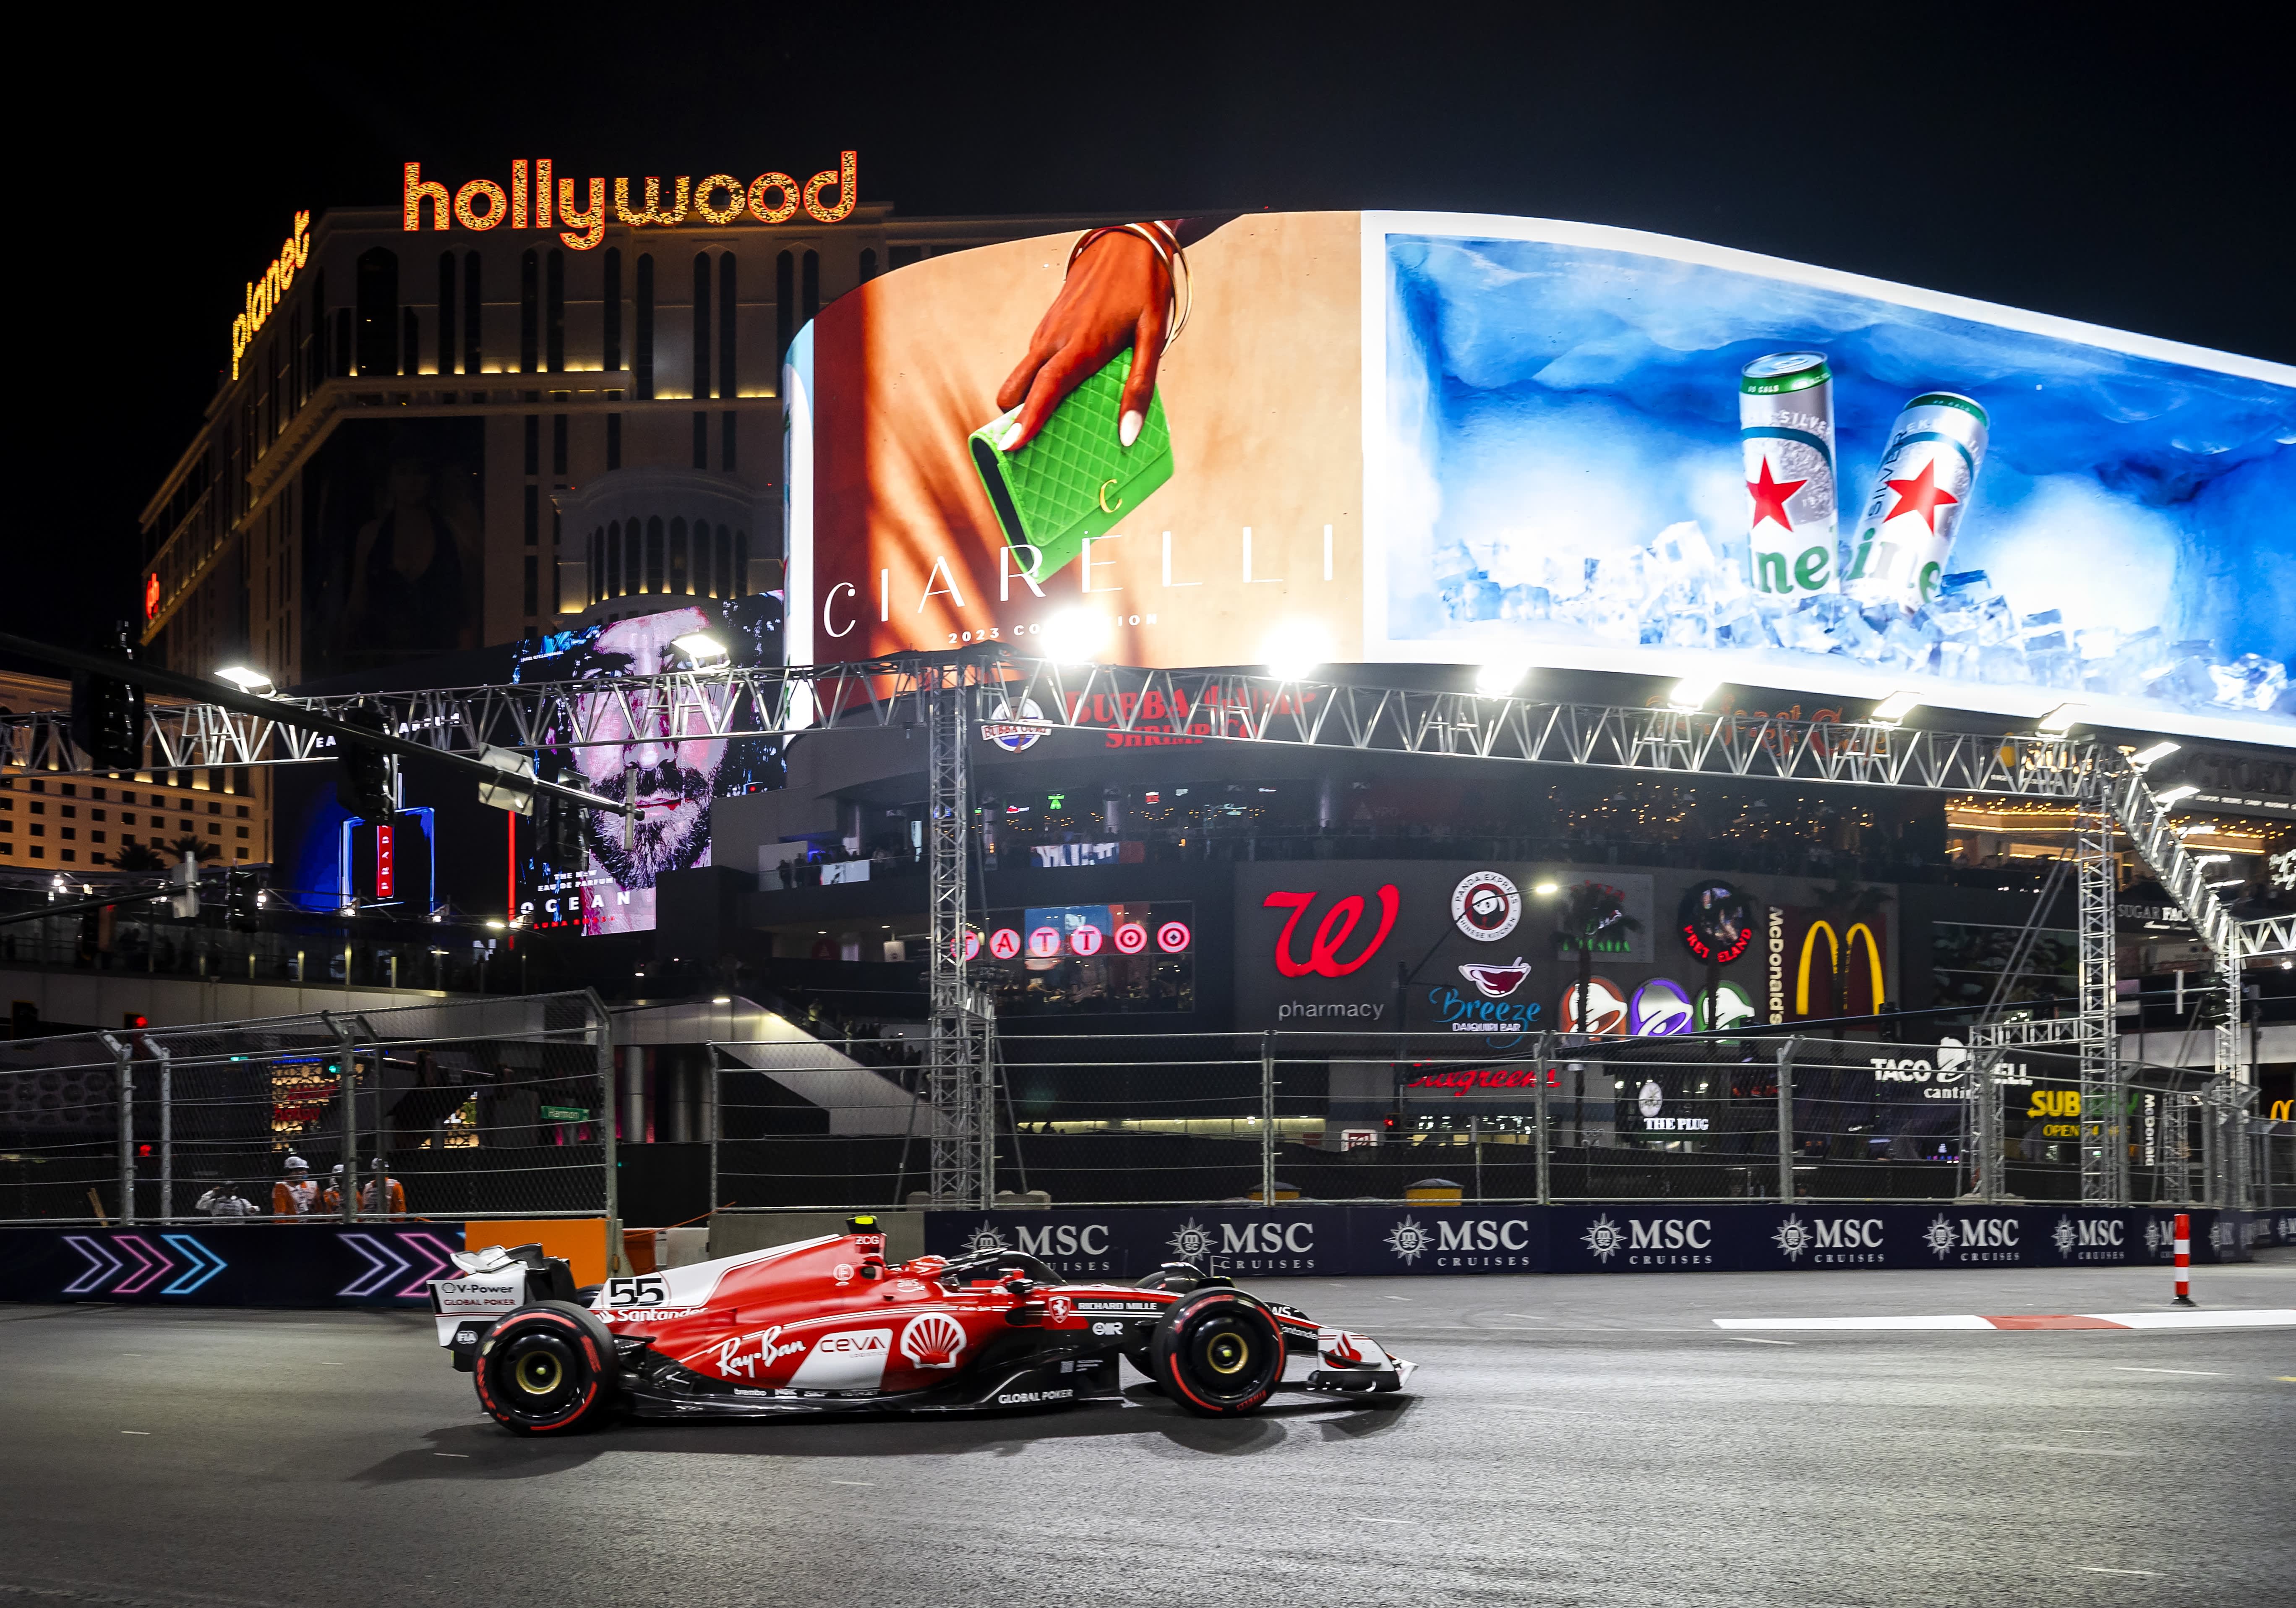 2023 Las Vegas Grand Prix – free practice